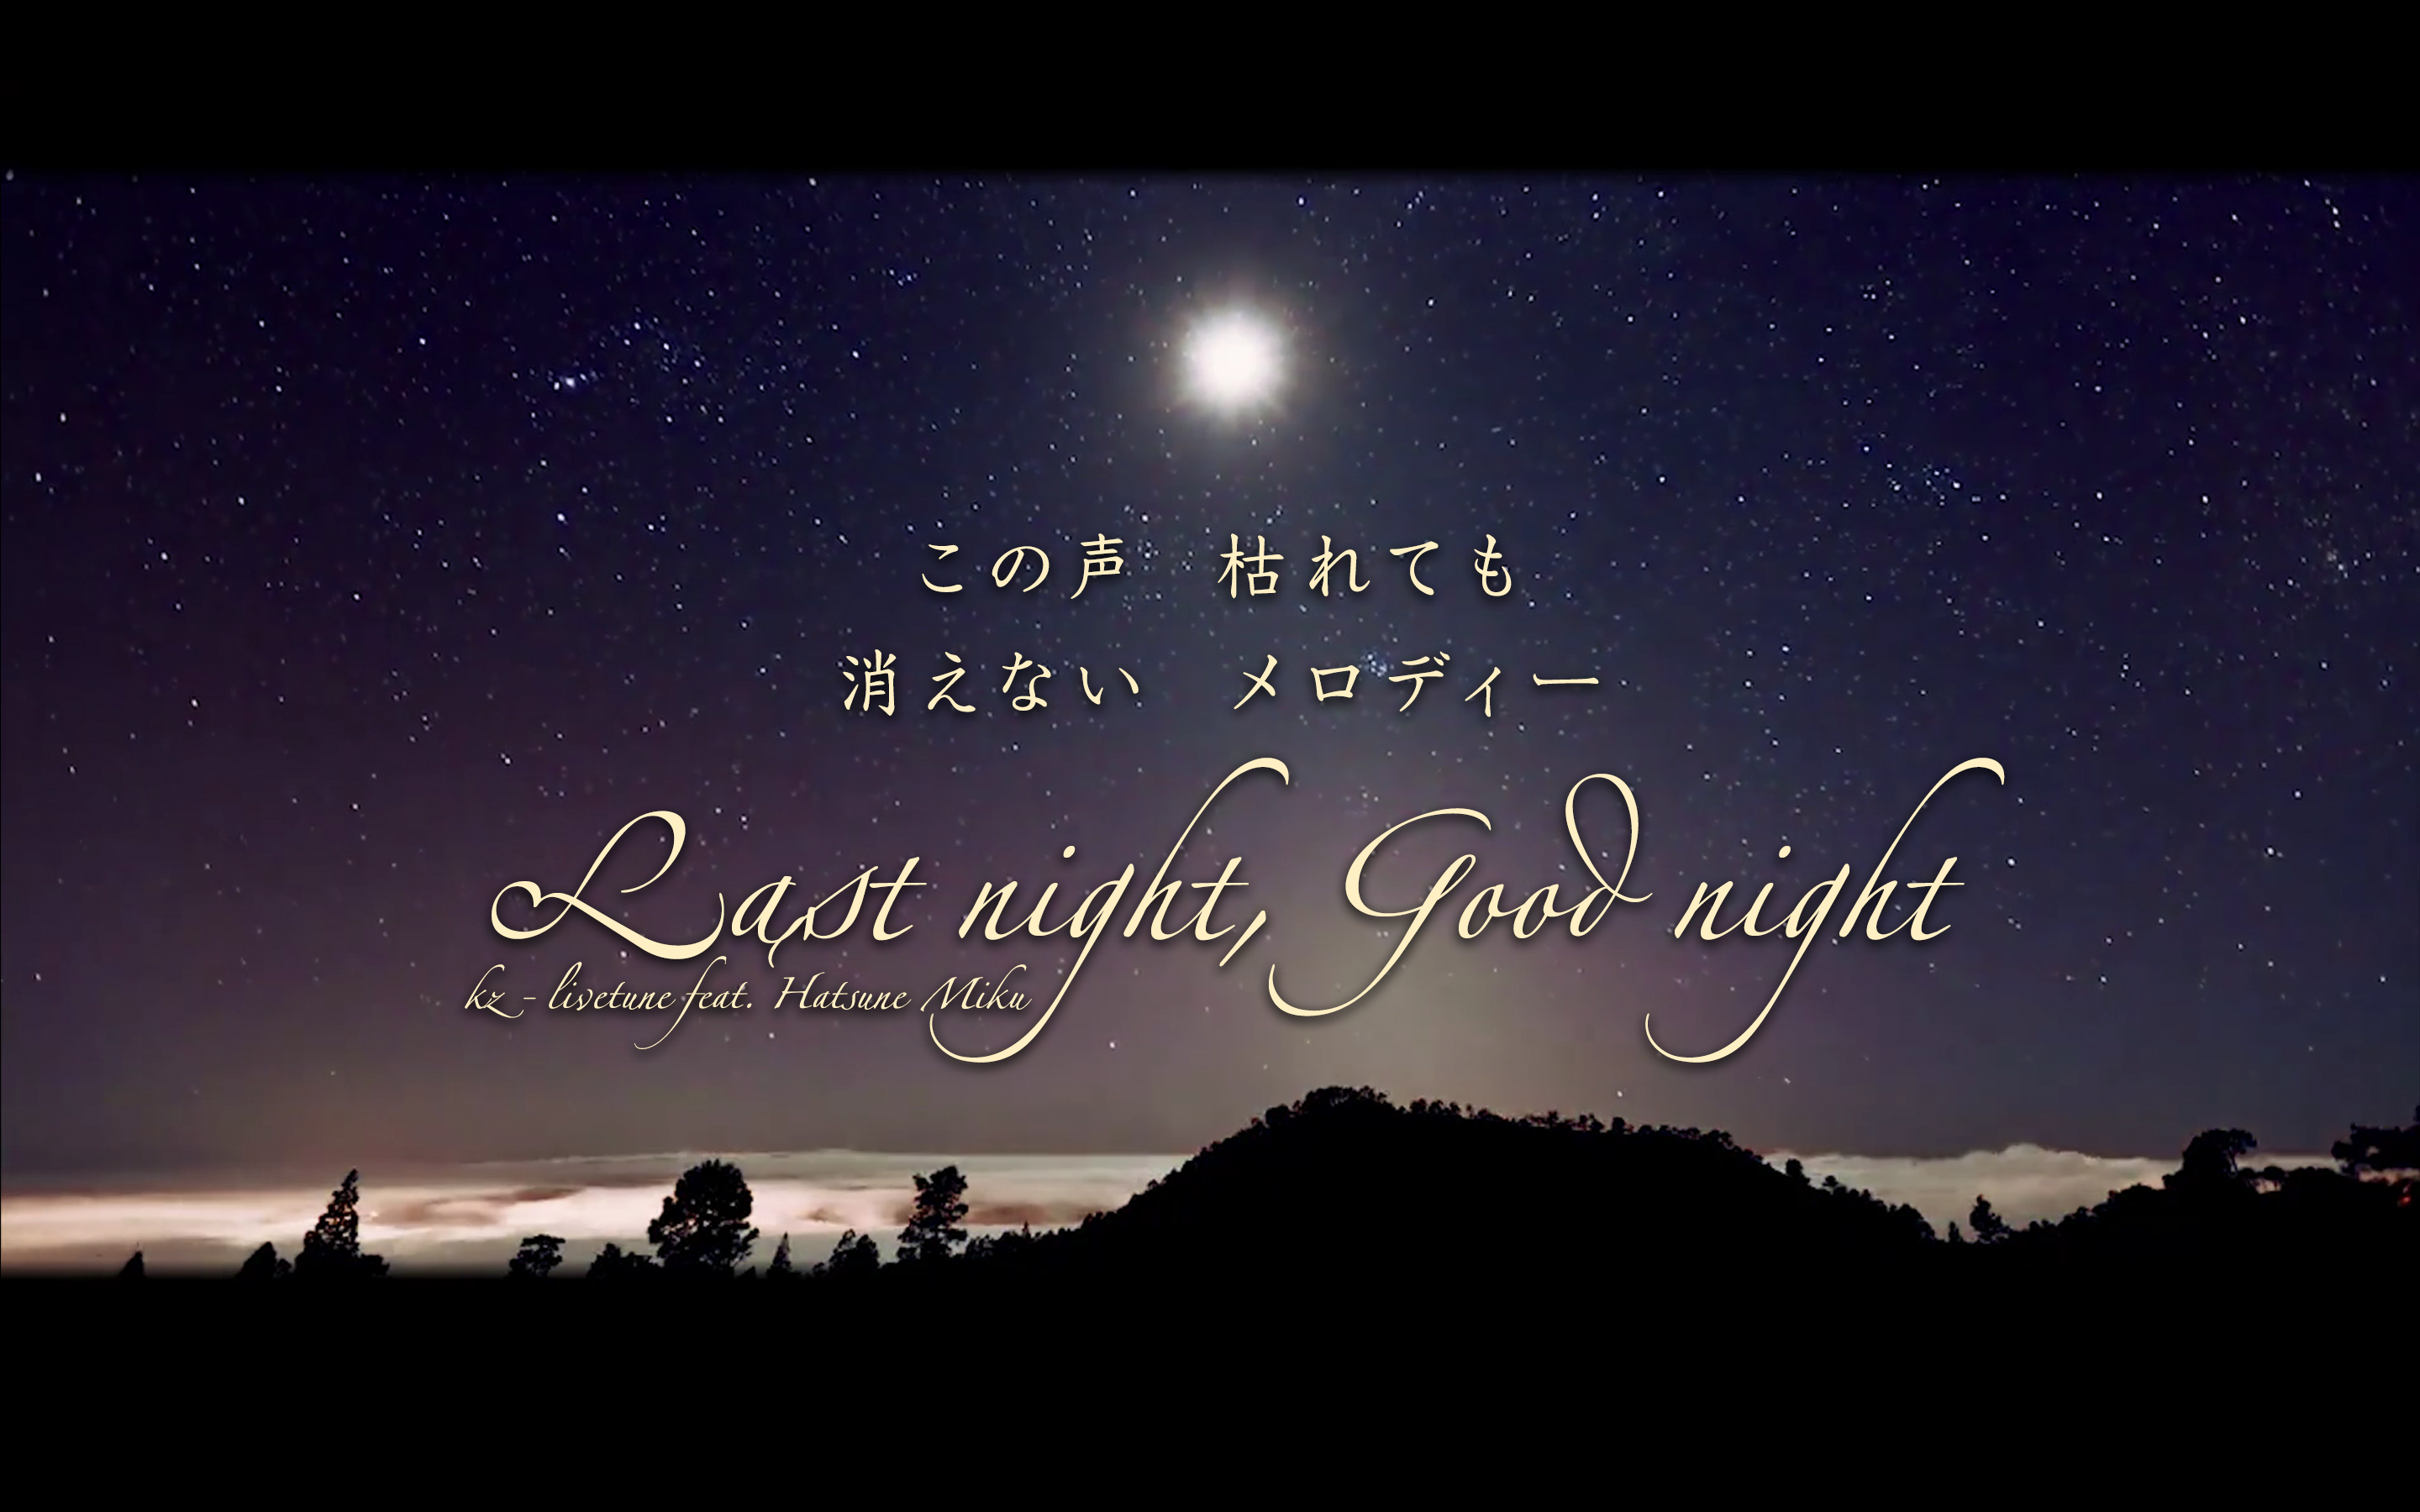 Last night, Good night (jp)